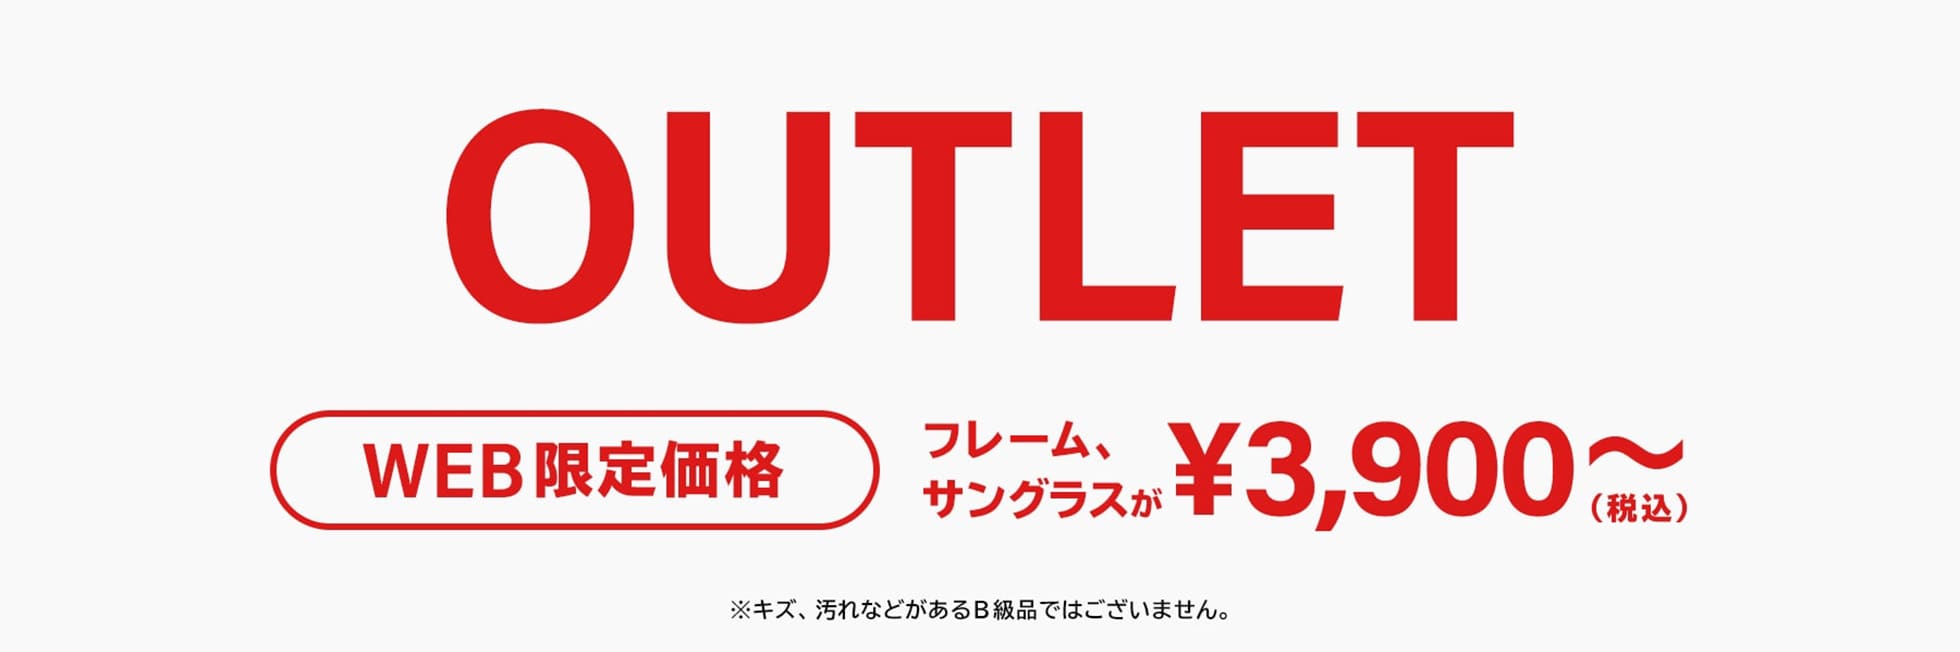 OUTLET WEB限定価格 メガネ（セットレンズ代込み）¥4,290〜（税込） サングラス¥3,300〜（税込）